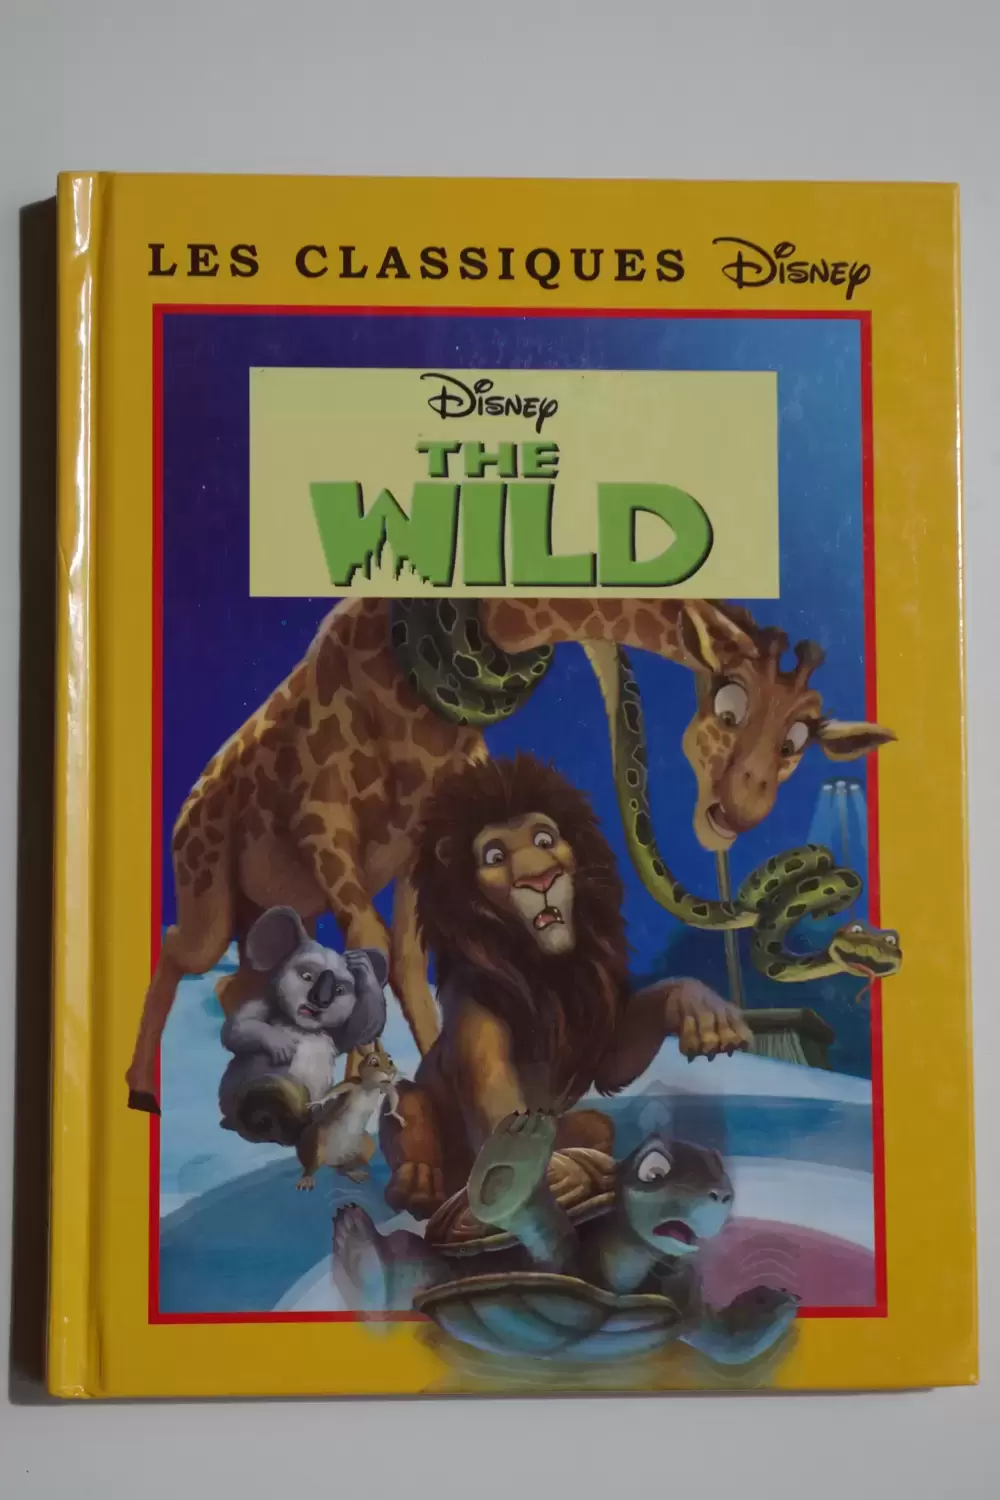 Les Classiques Disney - Edition France Loisirs - The Wild